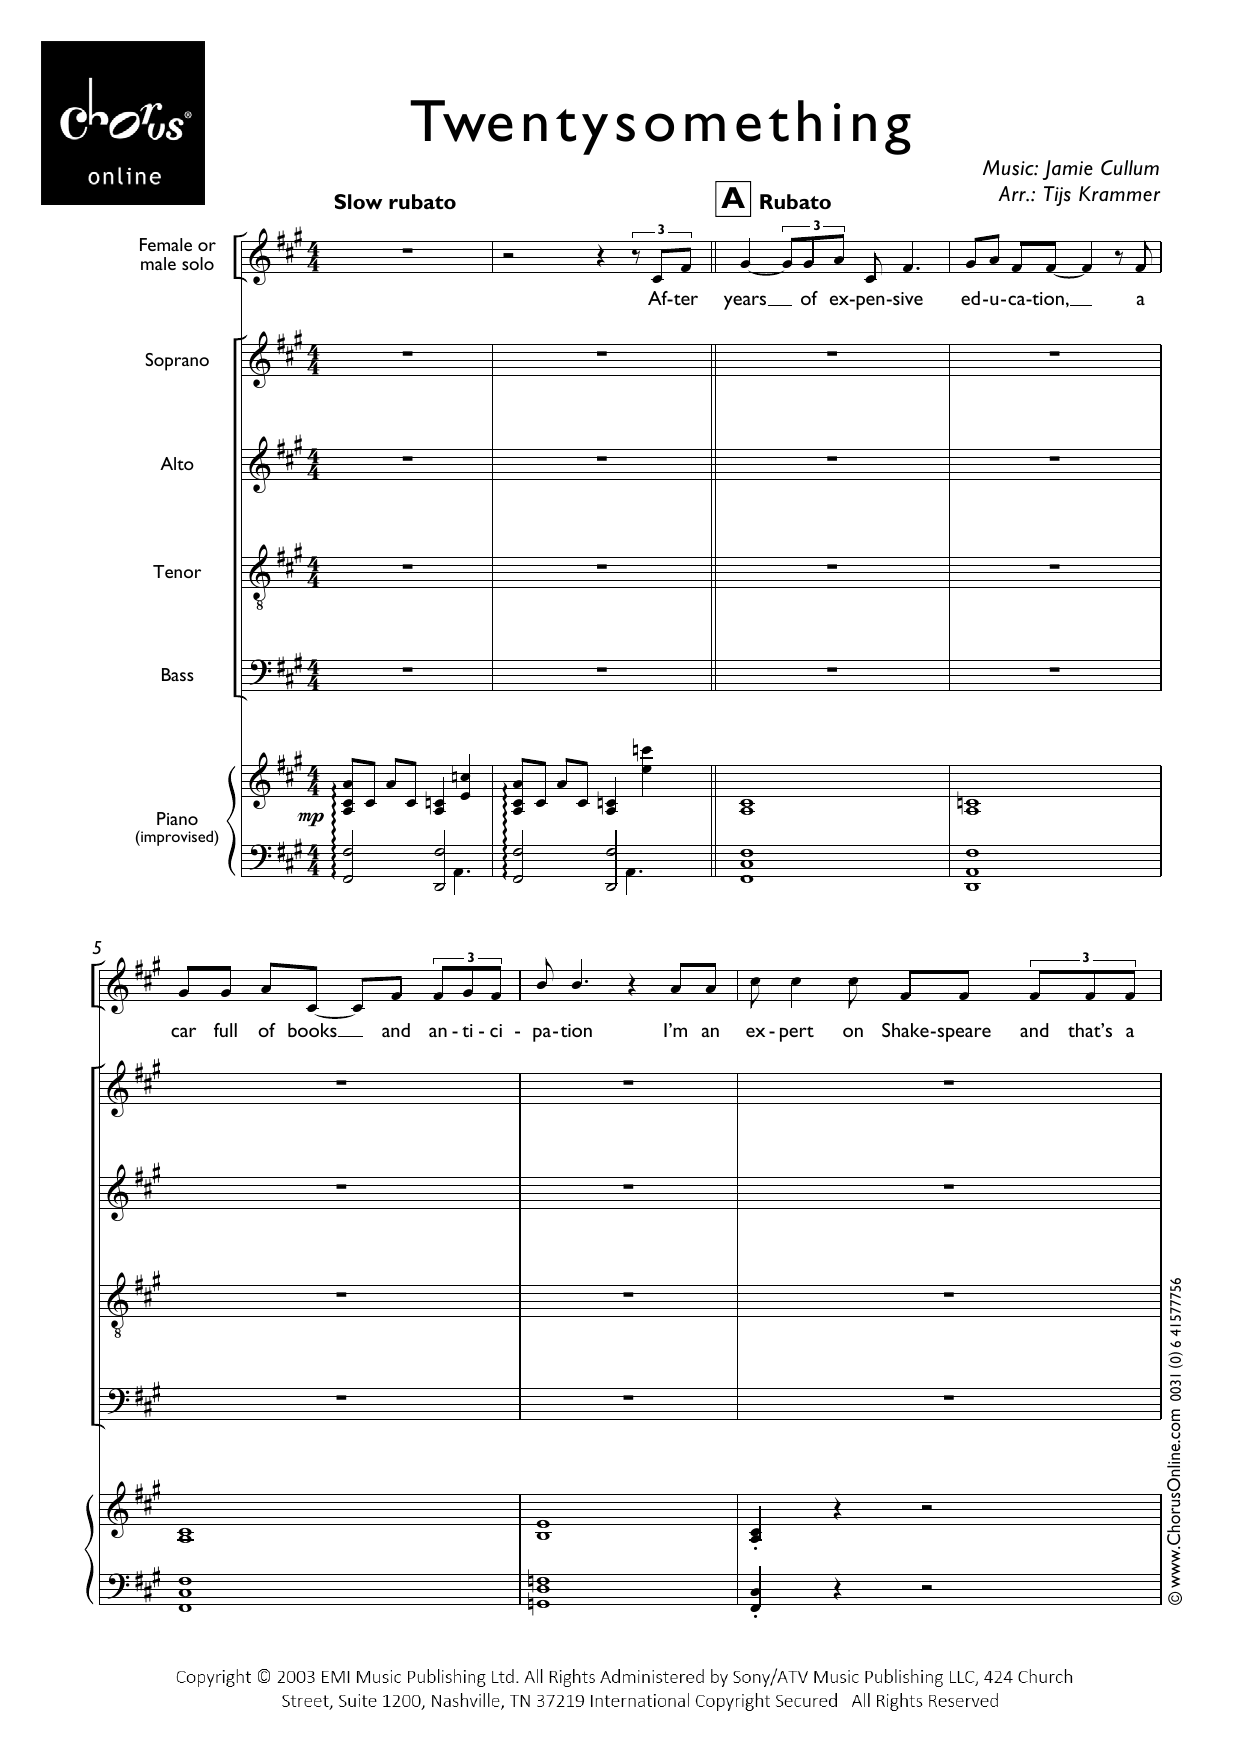 Jamie Cullum Twentysomething (arr. Tijs Krammer) sheet music notes printable PDF score